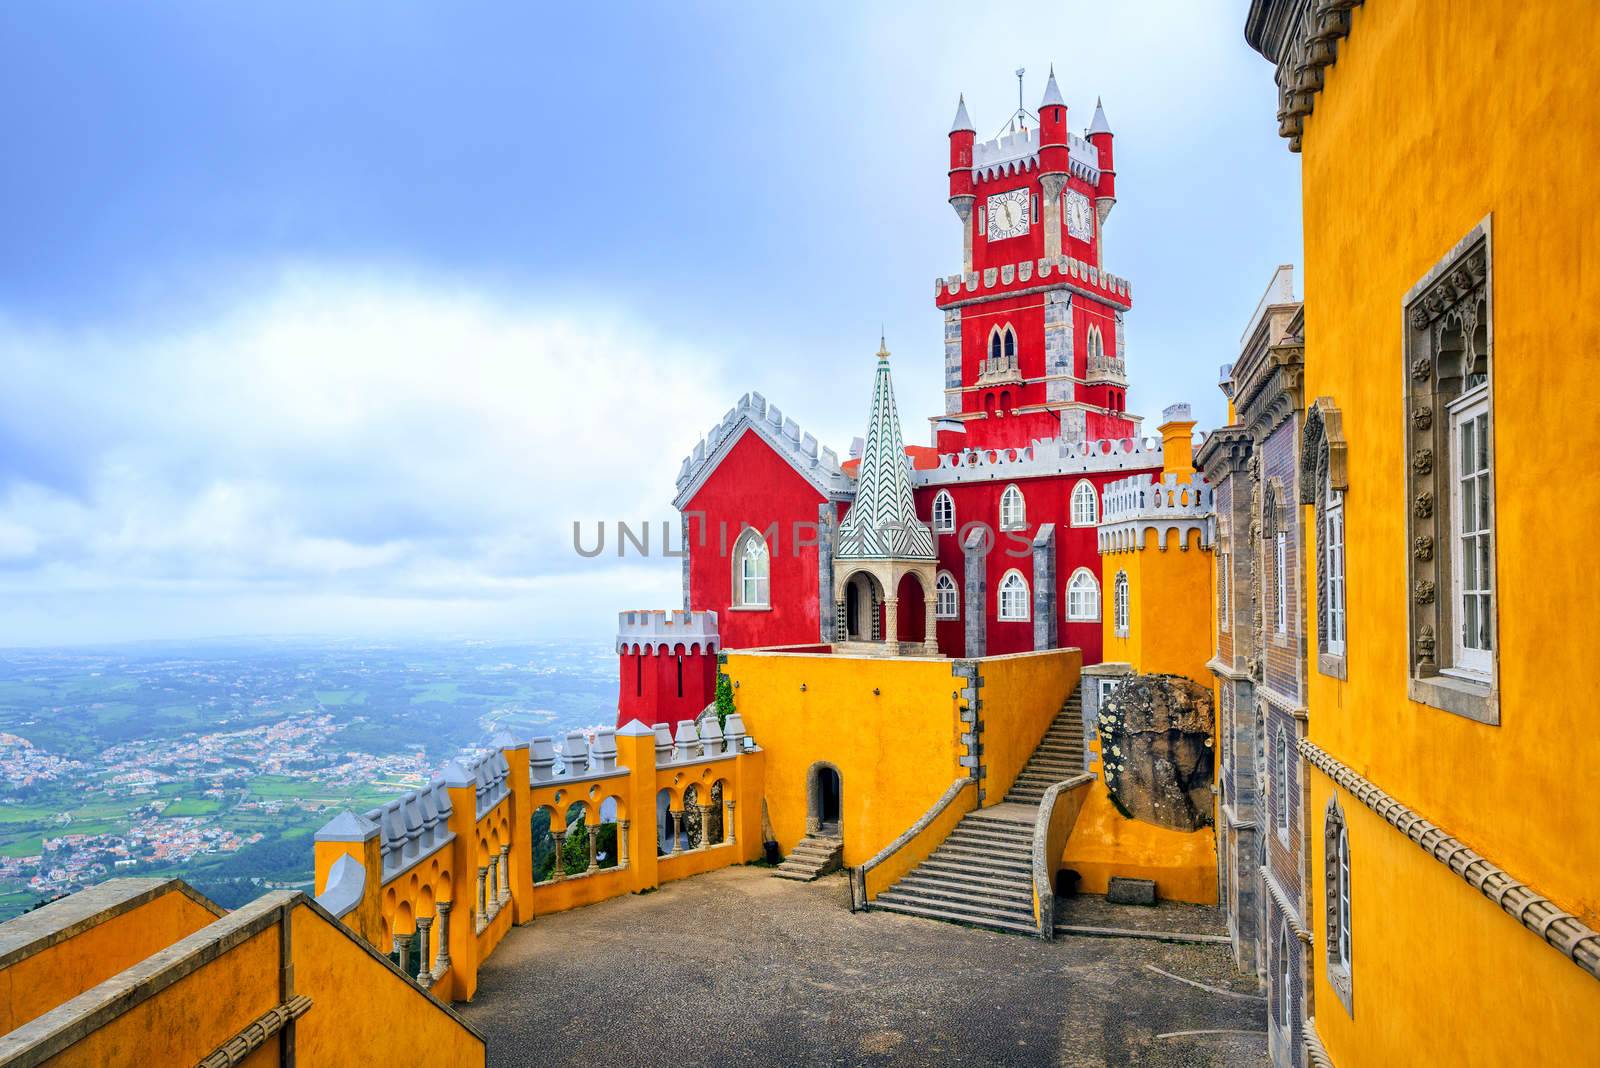 Pena Palace, Sintra, Portugal by GlobePhotos